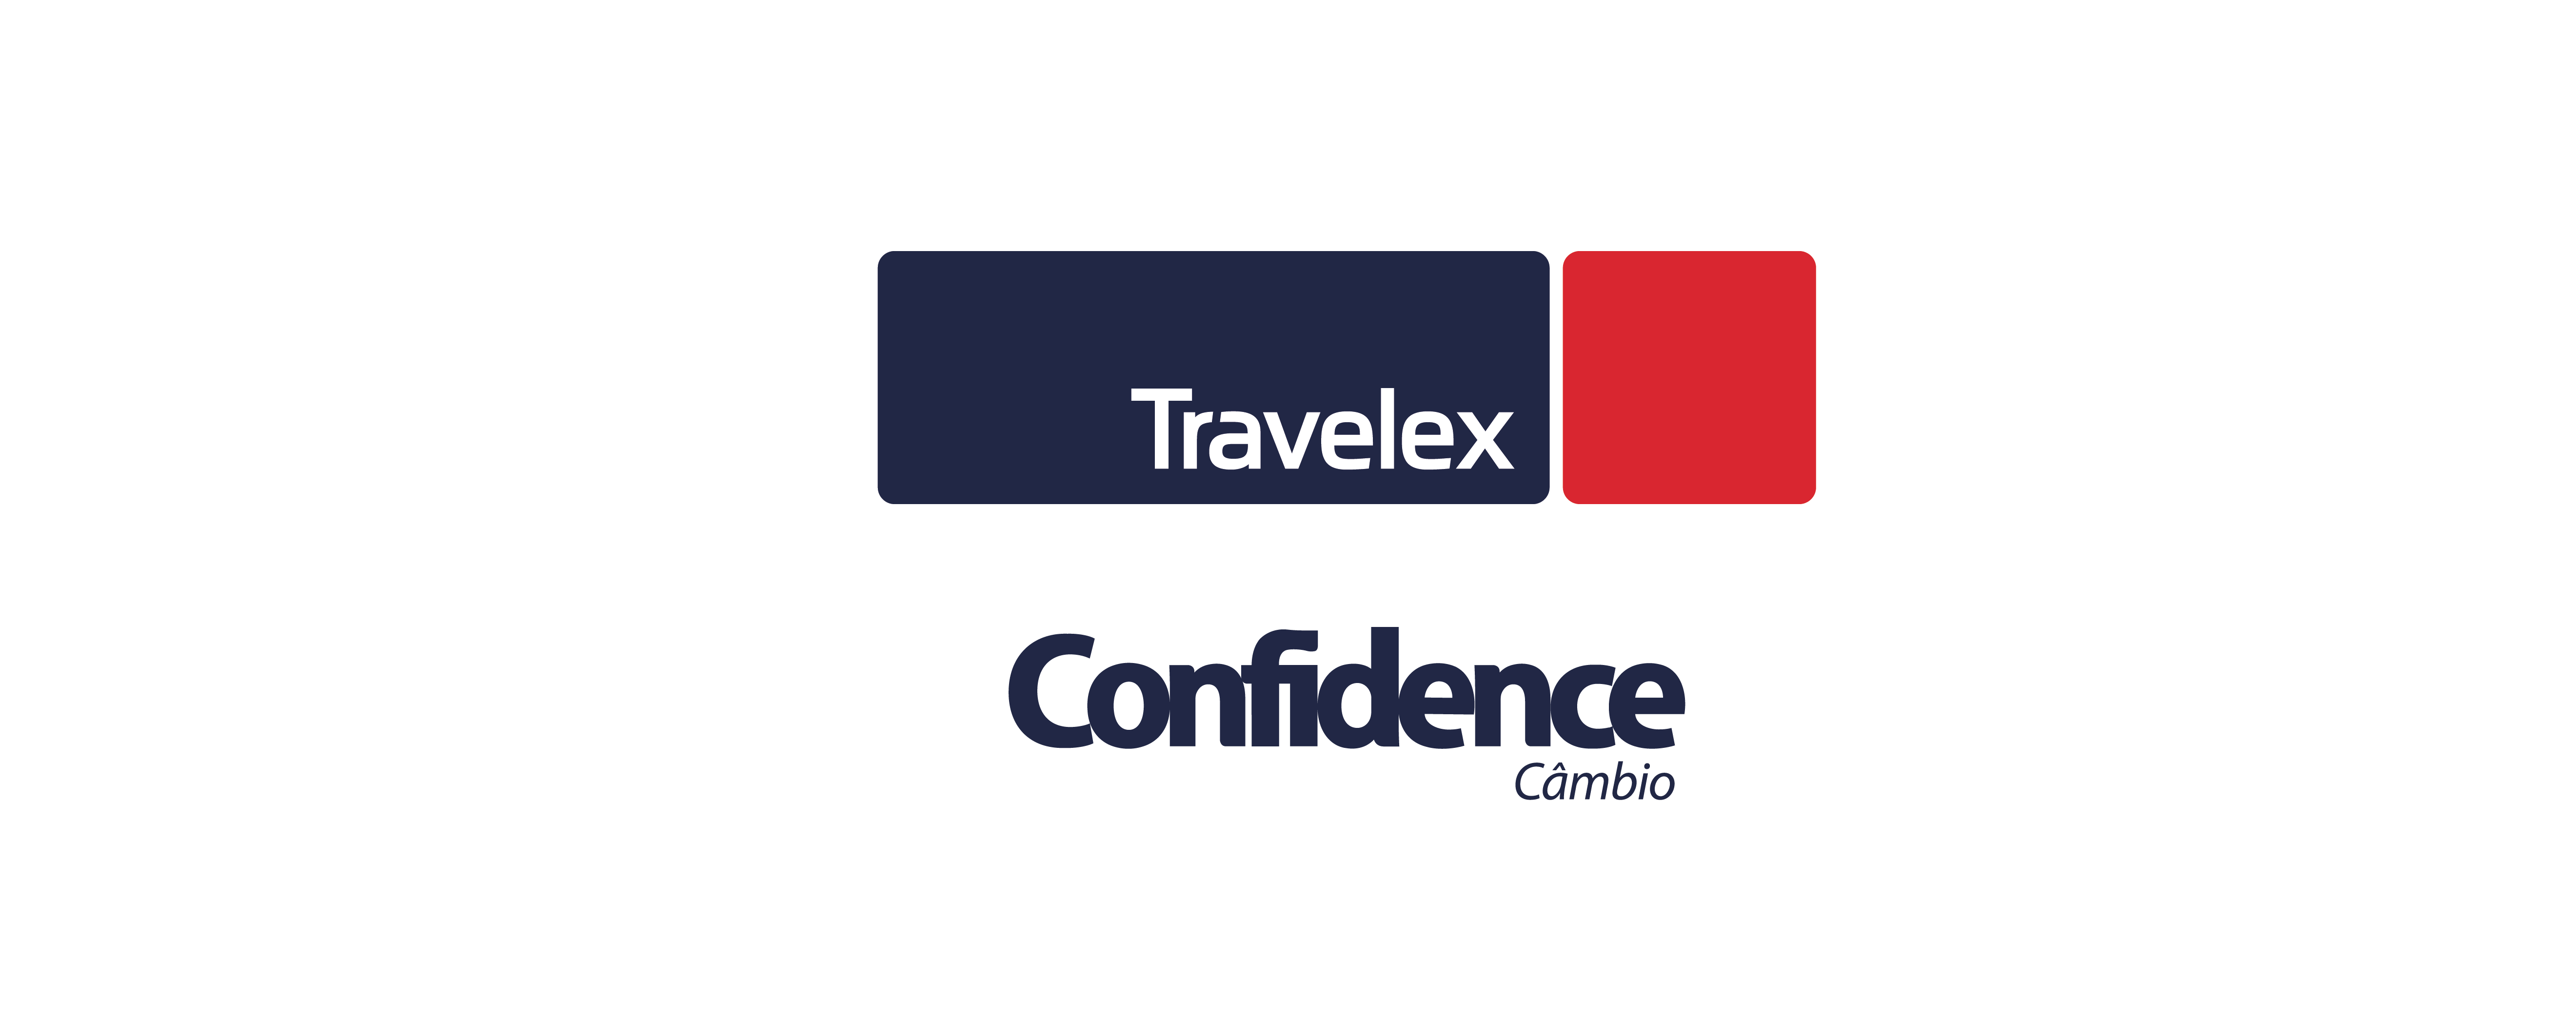 Travelex Confidence Cambio